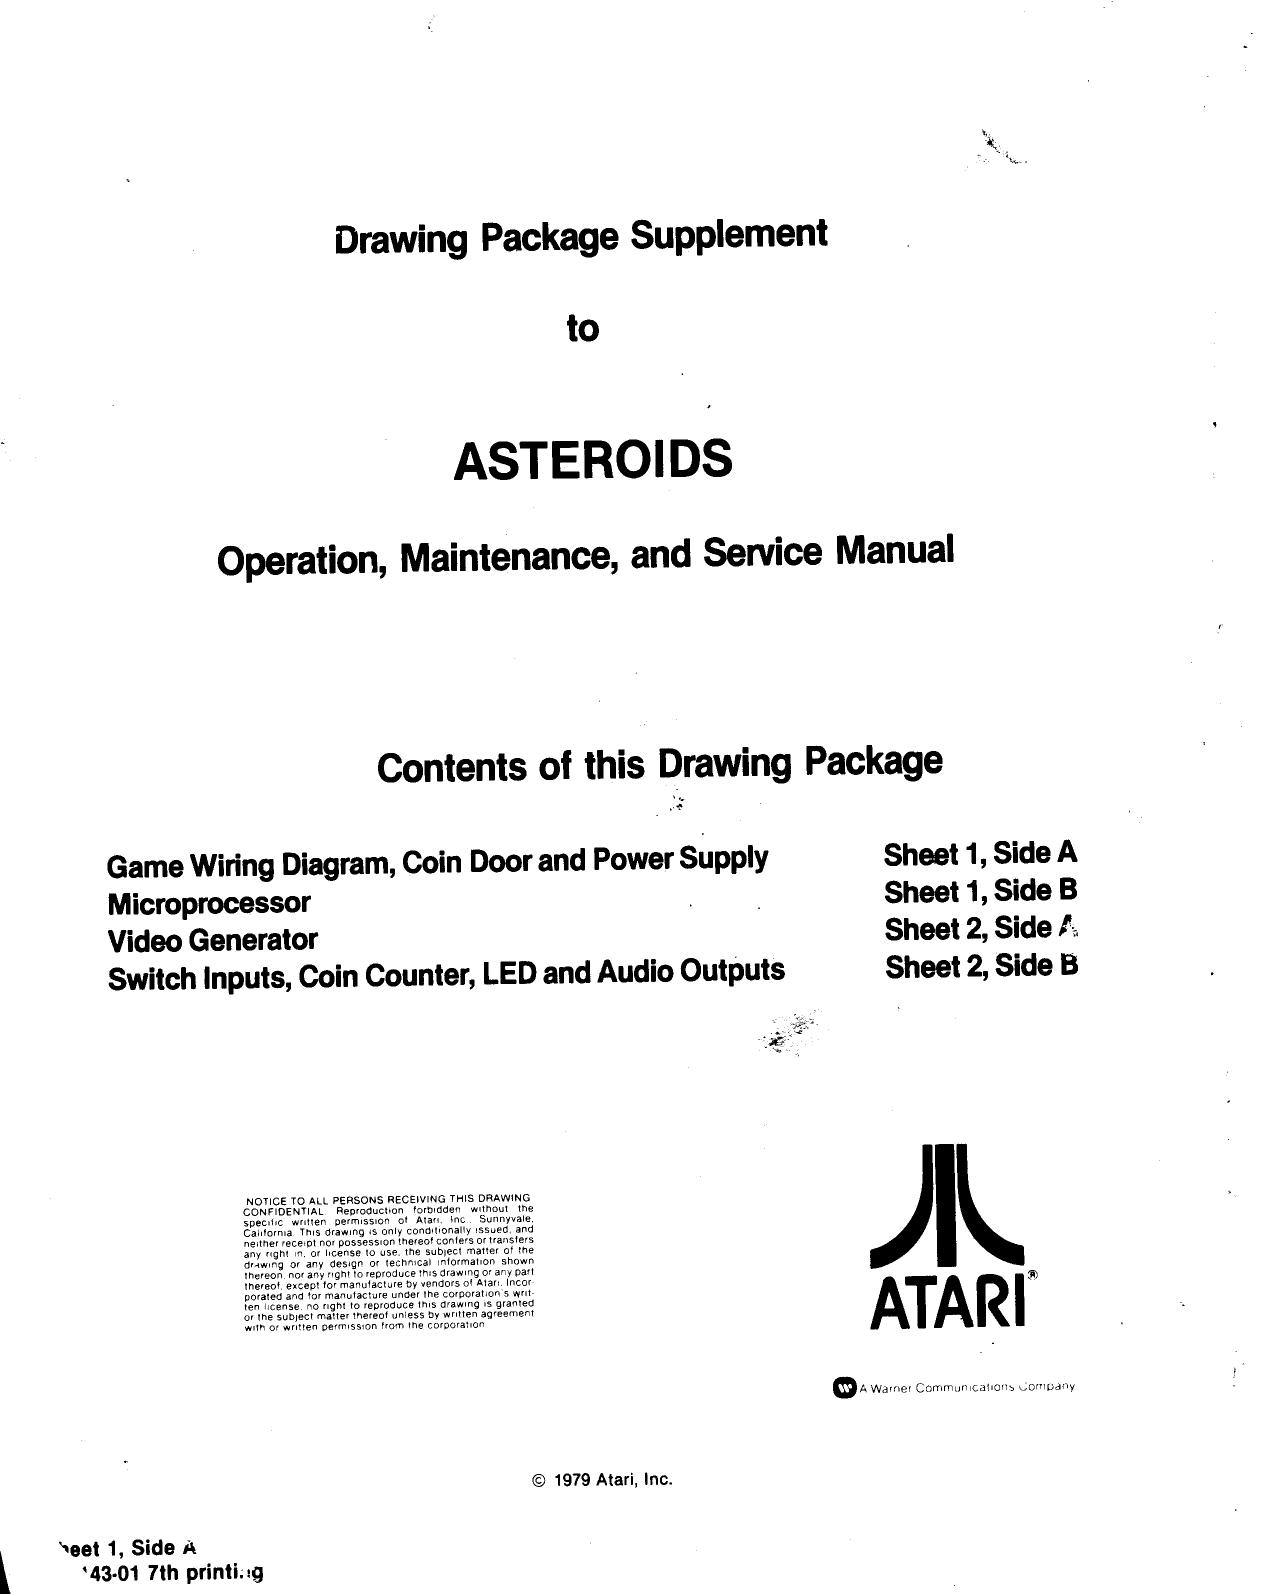 Asteroids (Caberat DP-143 7th Printing) (Drawing Package) (U)